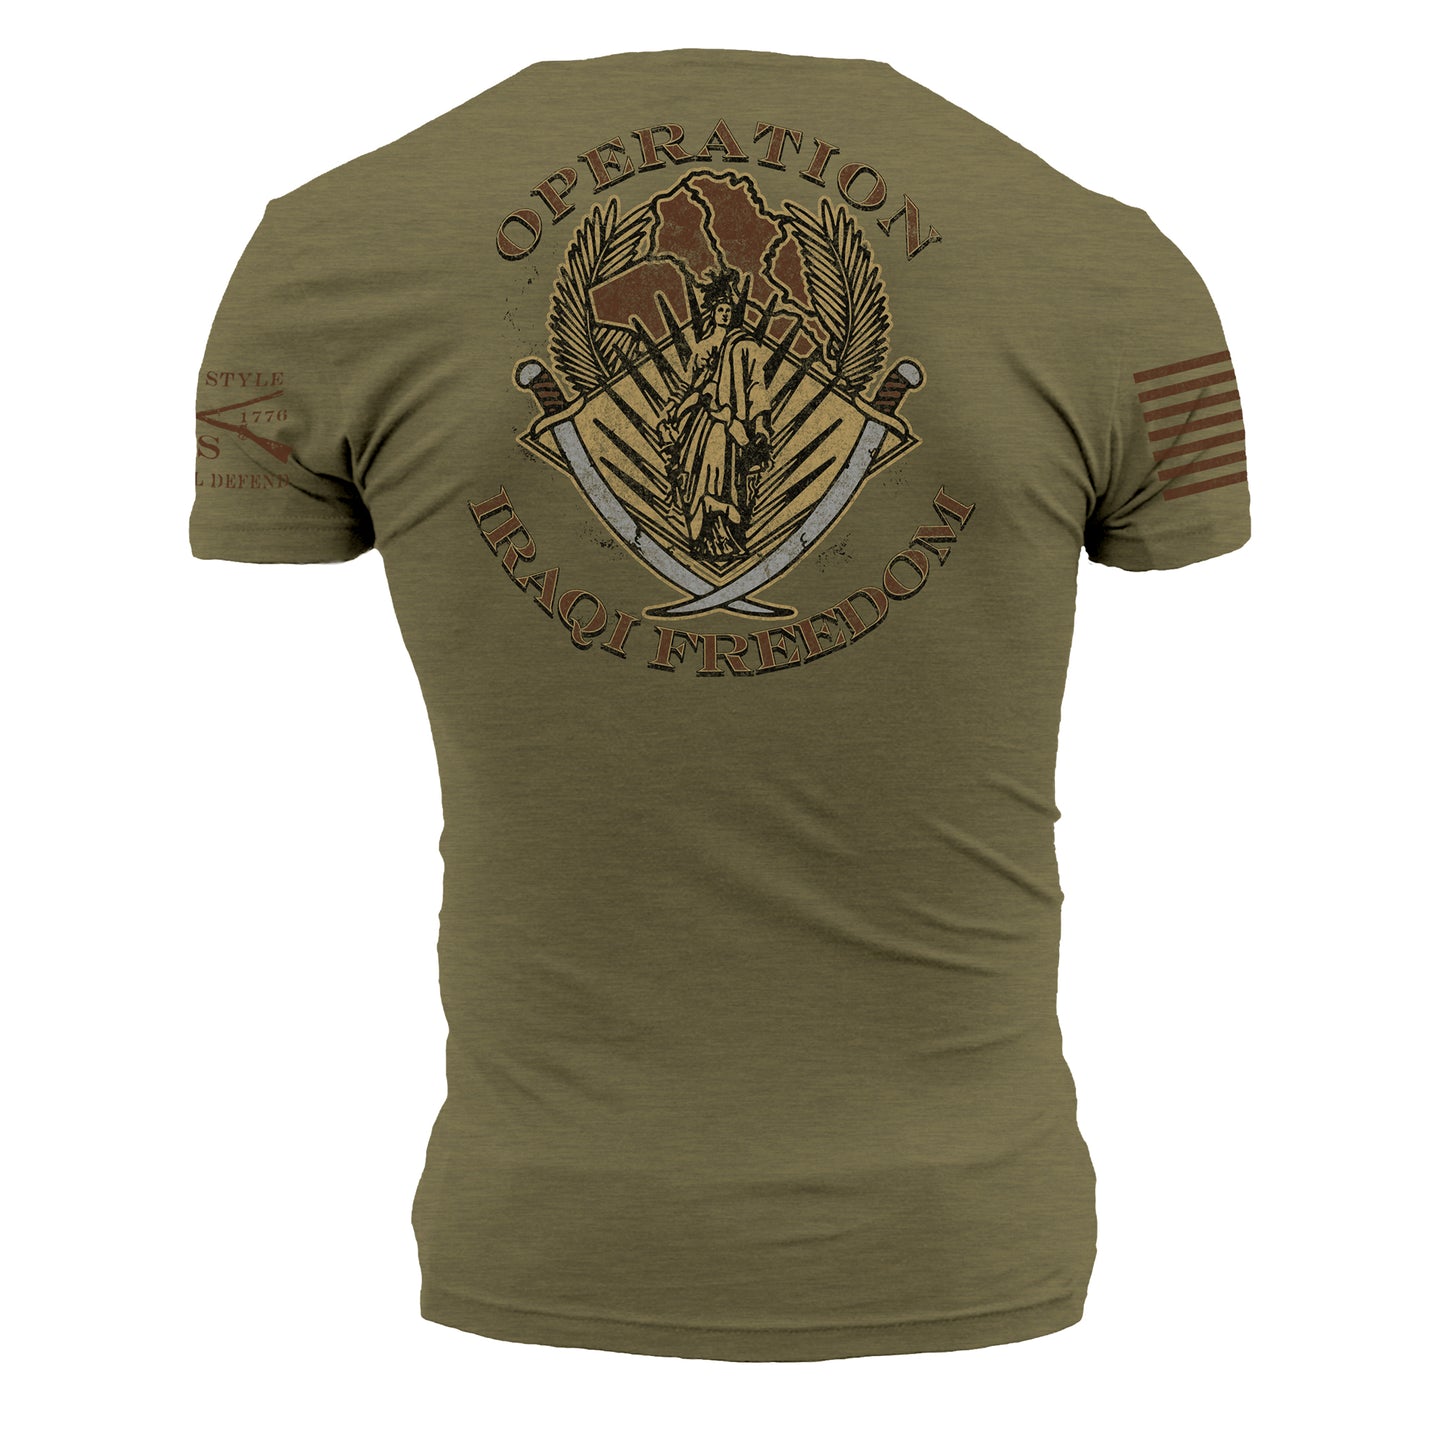  O.I.F. Veteran Military Shirts 